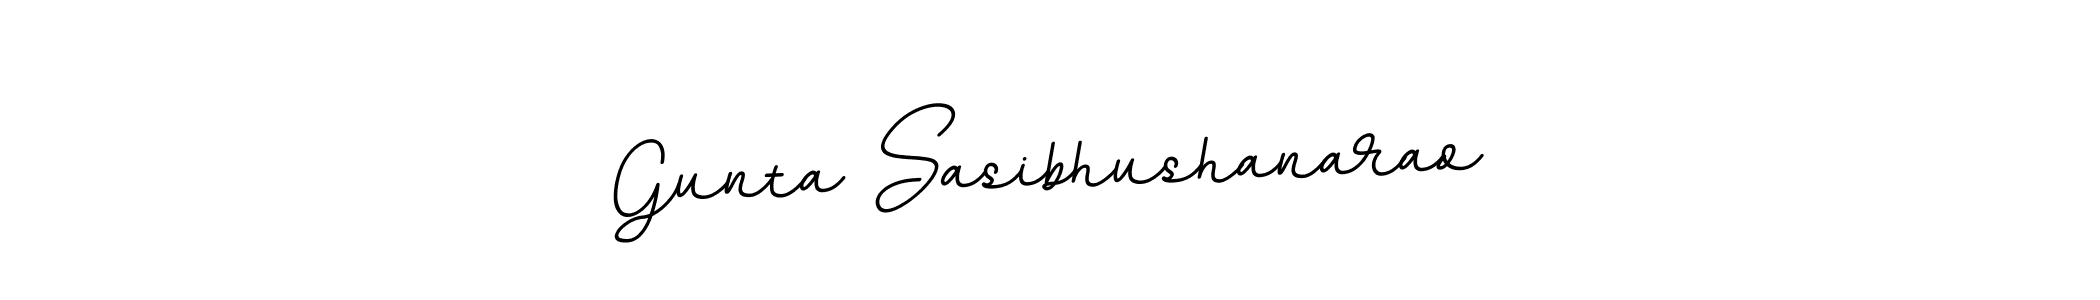 Make a beautiful signature design for name Gunta Sasibhushanarao. Use this online signature maker to create a handwritten signature for free. Gunta Sasibhushanarao signature style 11 images and pictures png